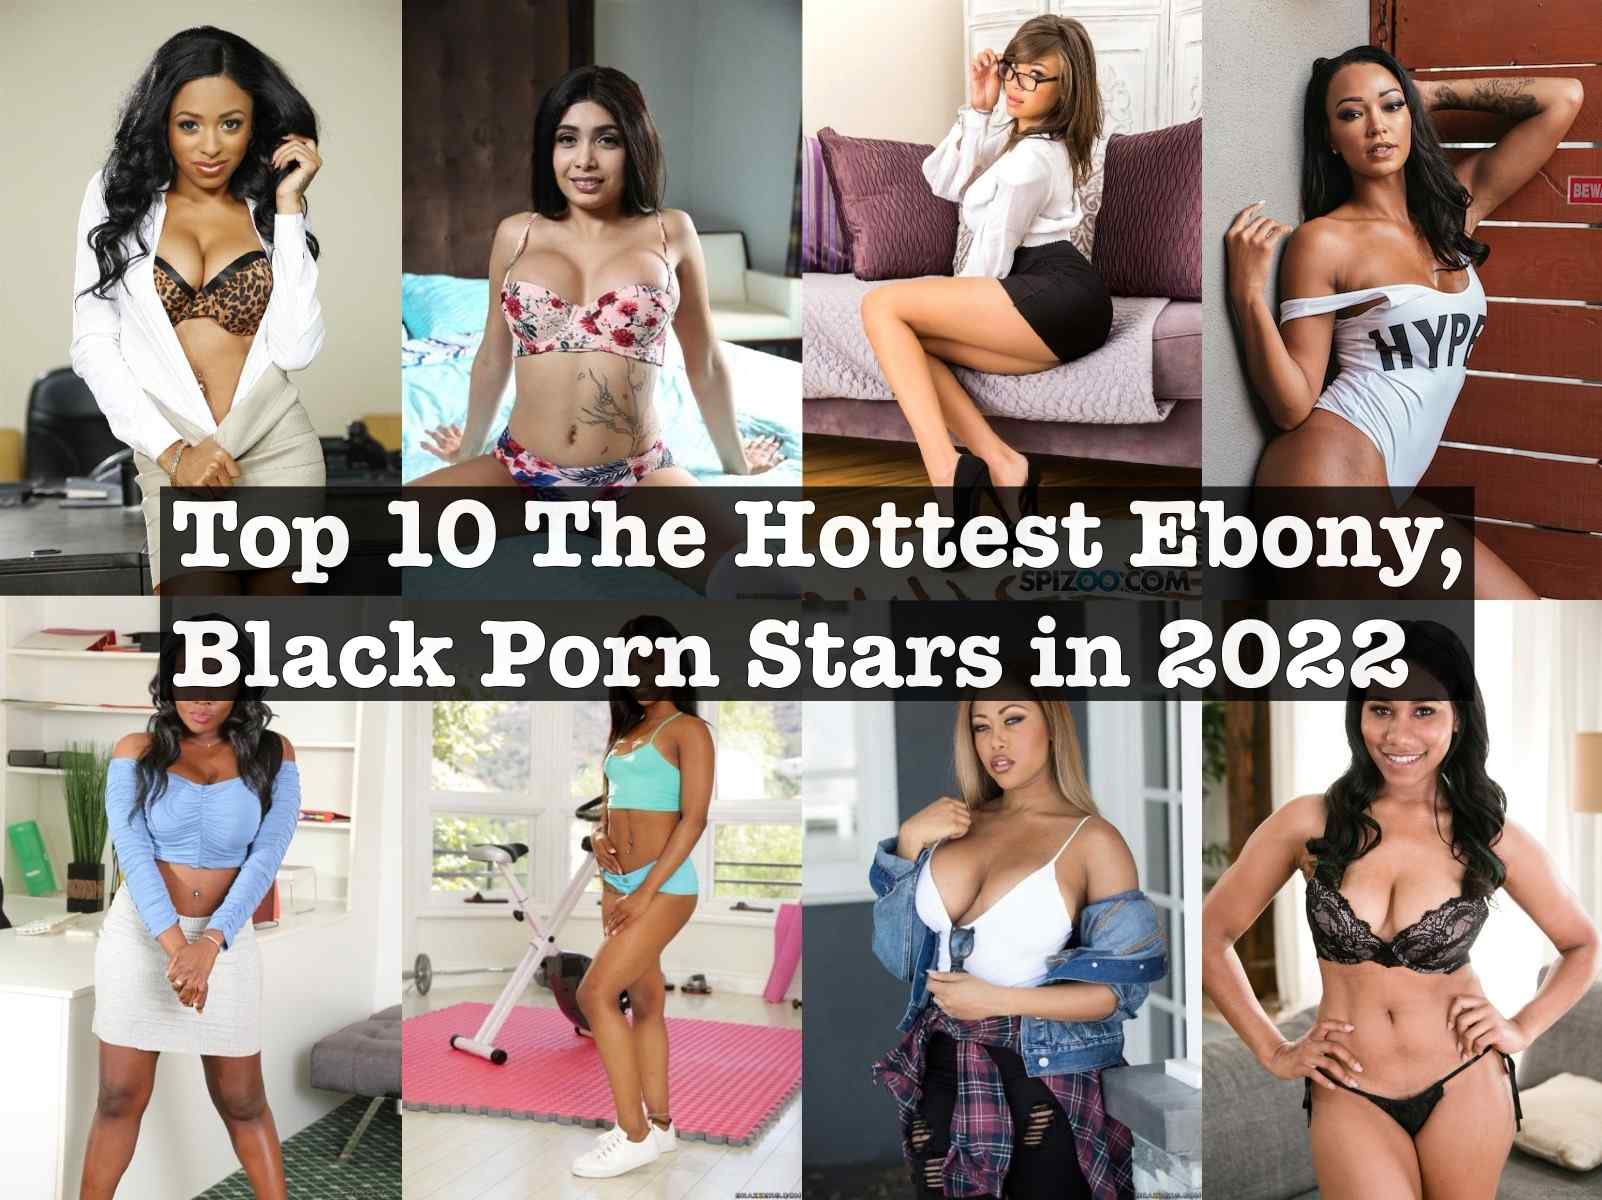 Top Porn Stars Black - Top Black Porn Stars in 2022 | Best 10 Hottest Ebony